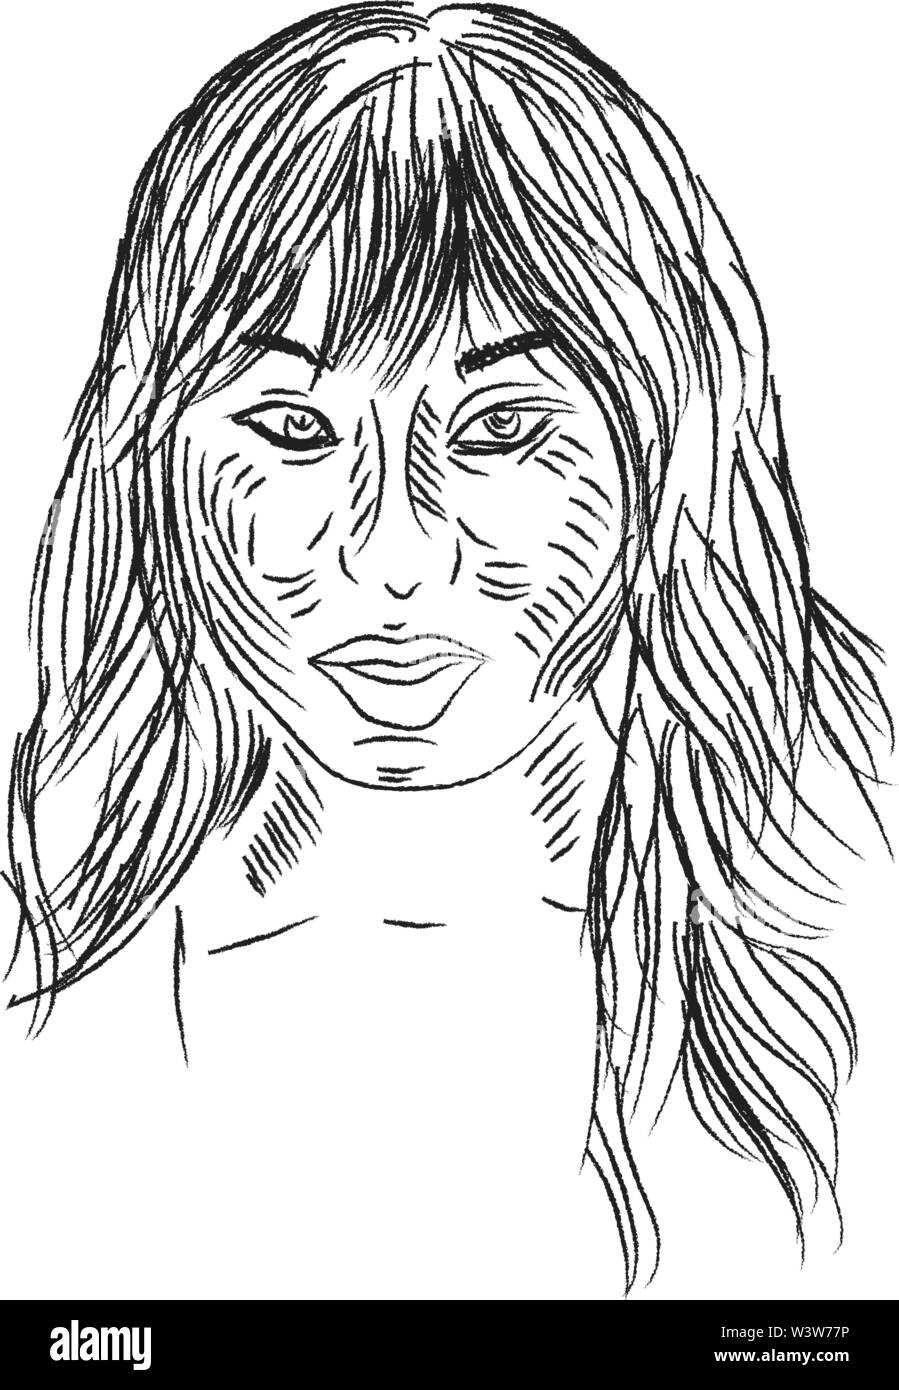 Girl drawing, illustration, vector on white background. Stock Vector